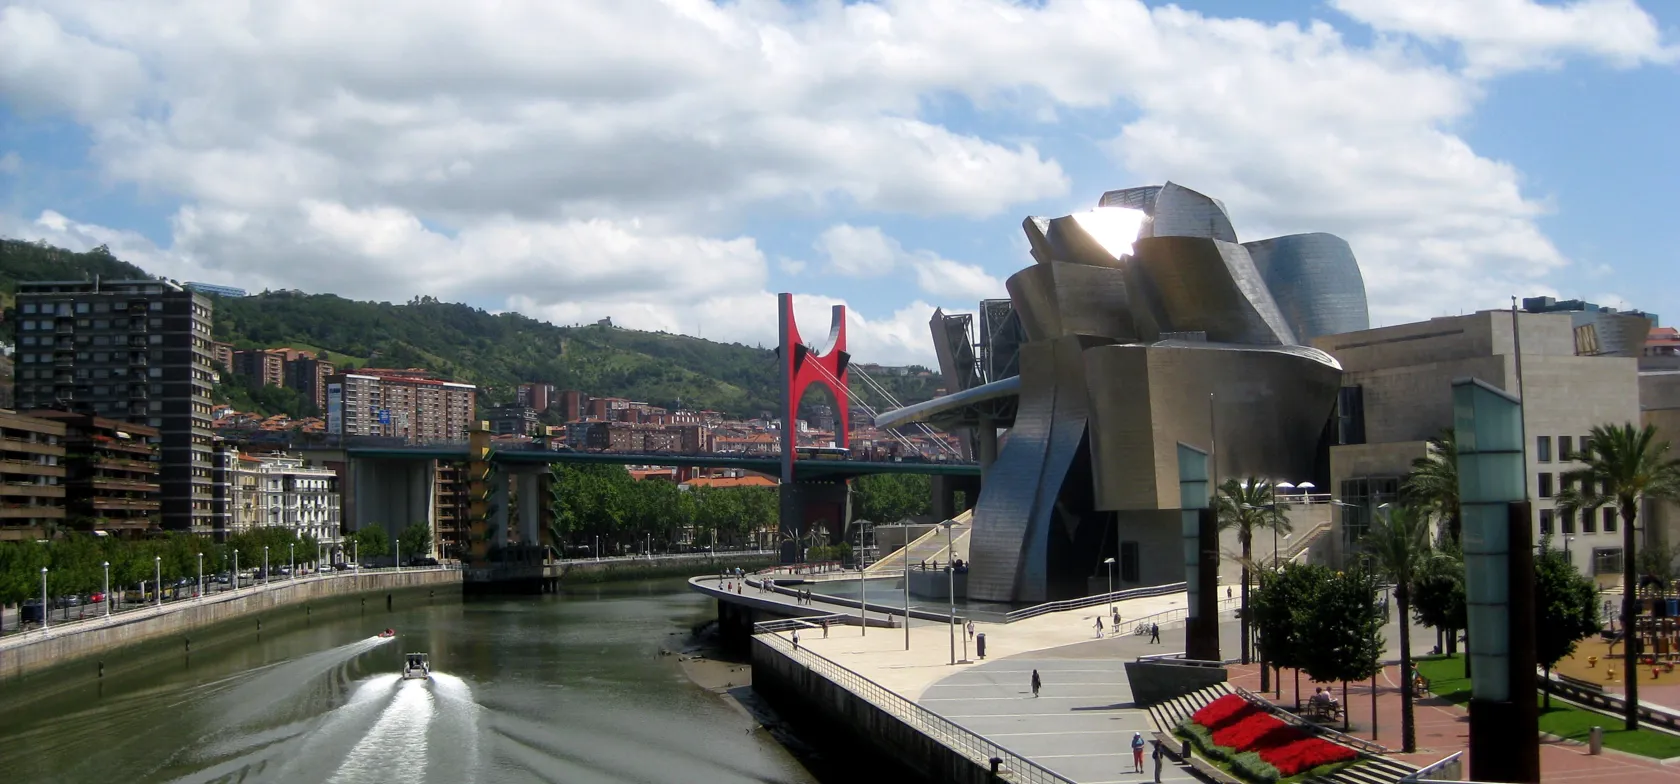 Det verdensberømte Guggenheim kunstmuseum er en unik seværdighed. Foto Viktors Farmor